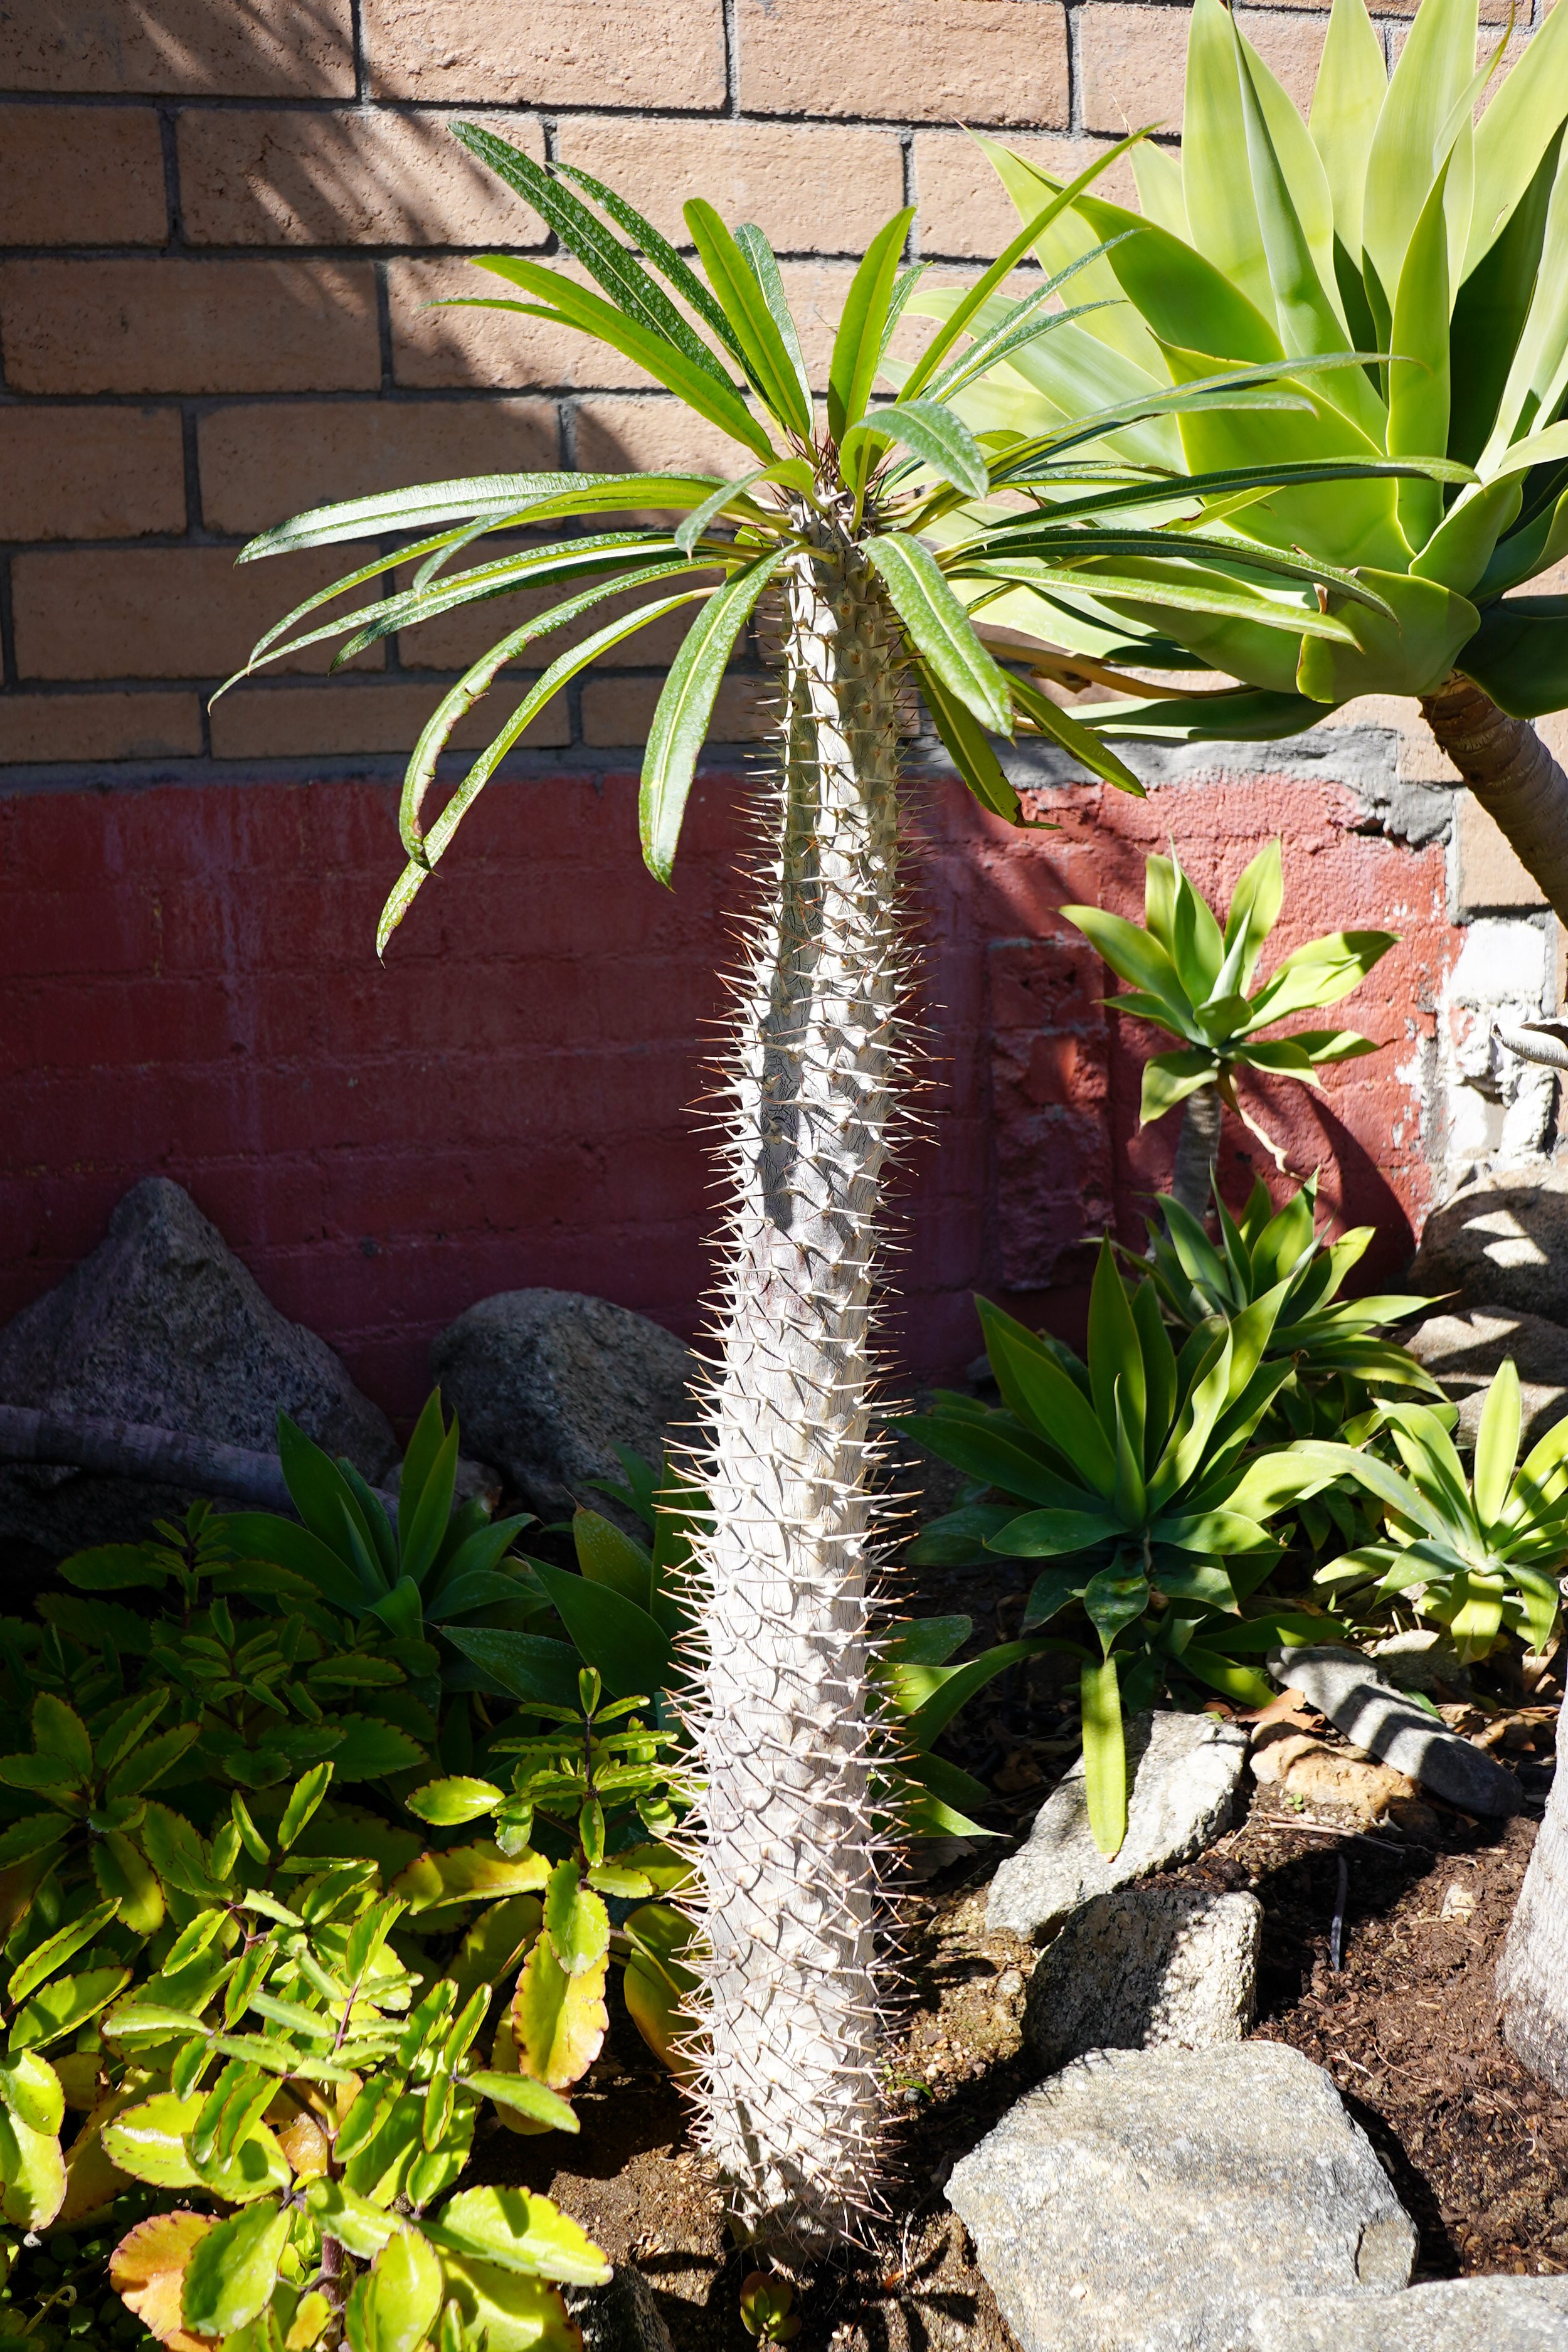 madagascar palm — gdnc nursery